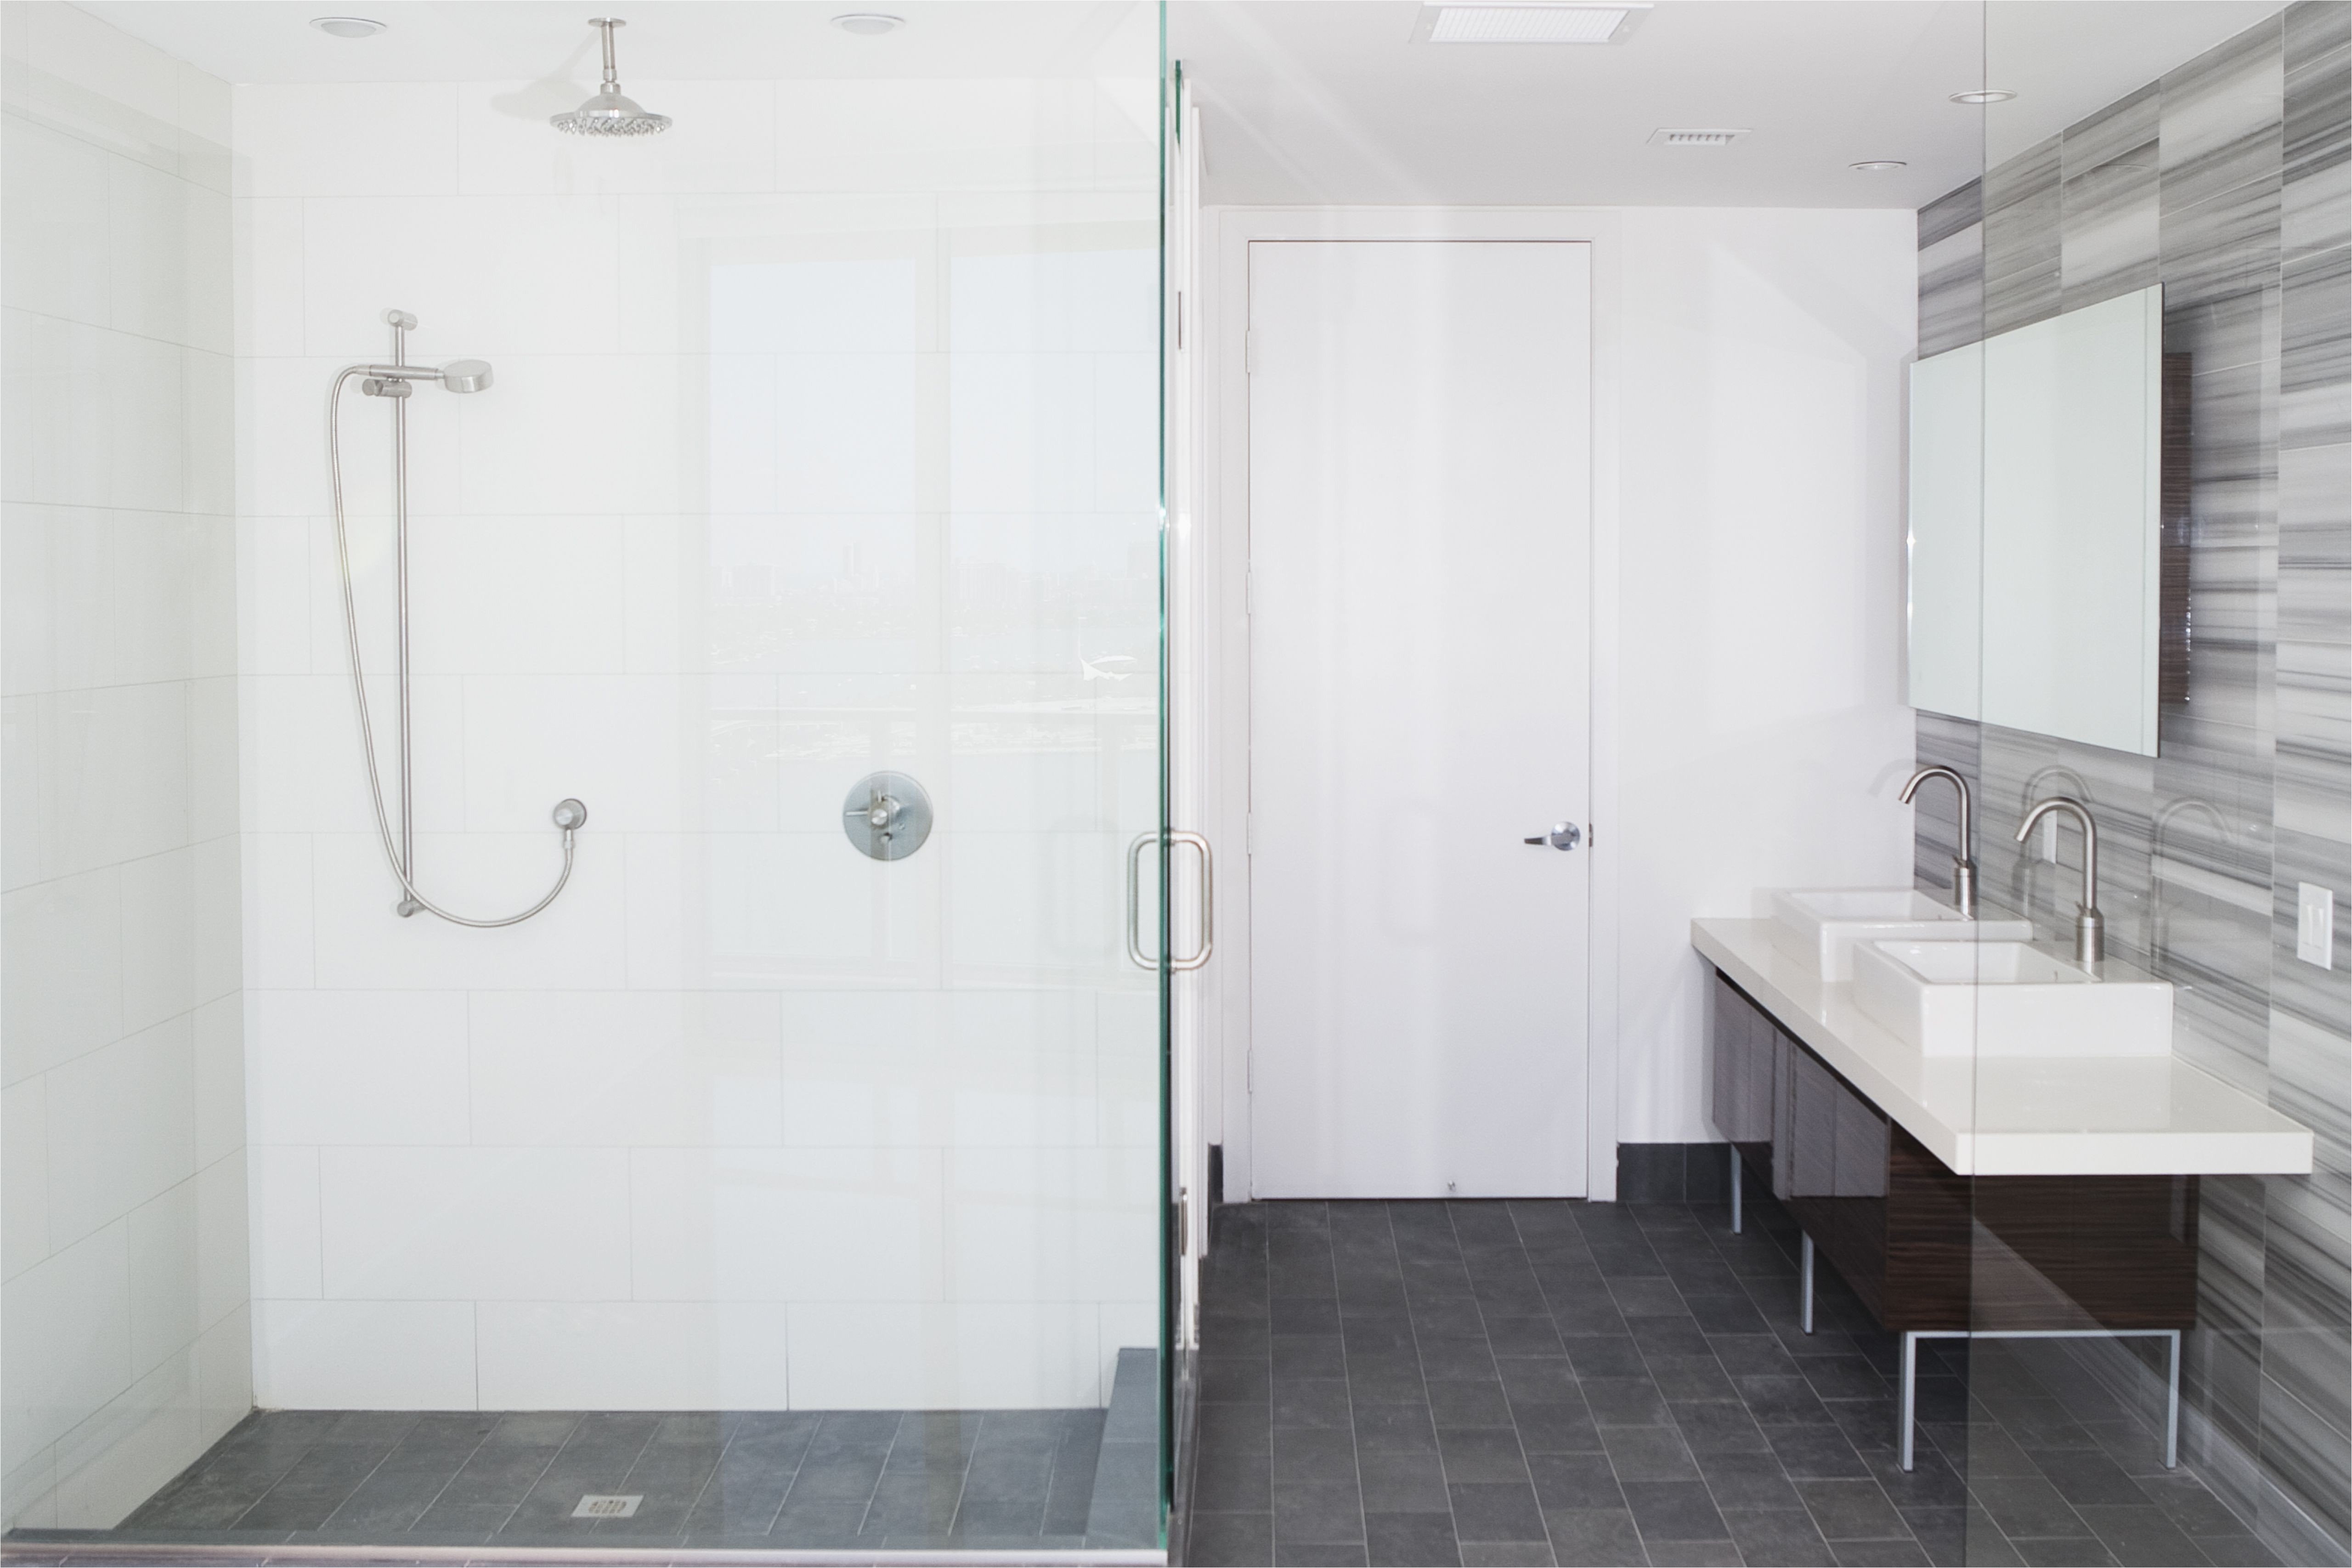 shower sinks and mirror in modern bathroom 533766223 588d18b45f9b5874ee14cb5c jpg